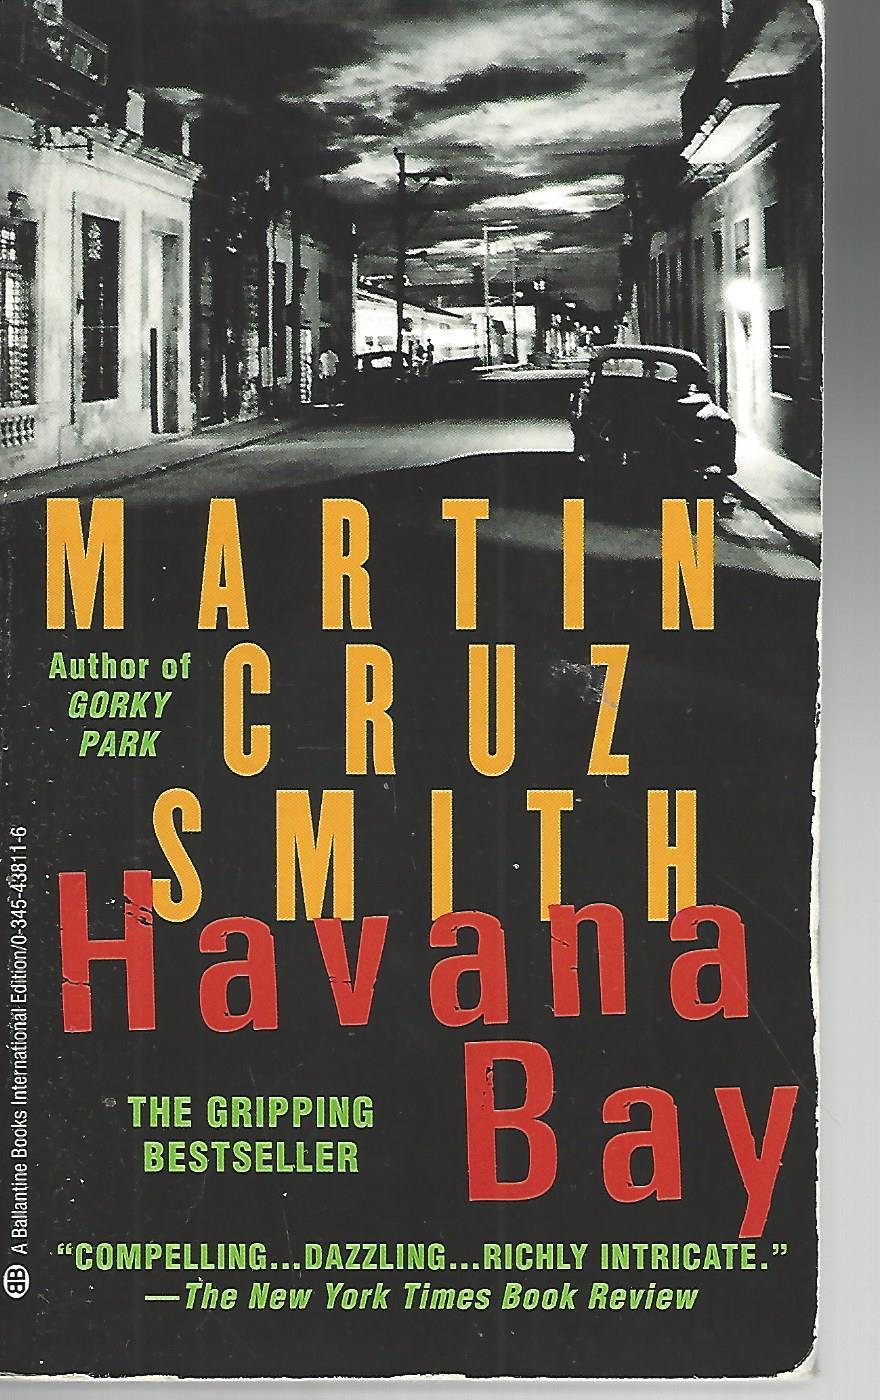 Havana Bay - Smith, Martin Cruz